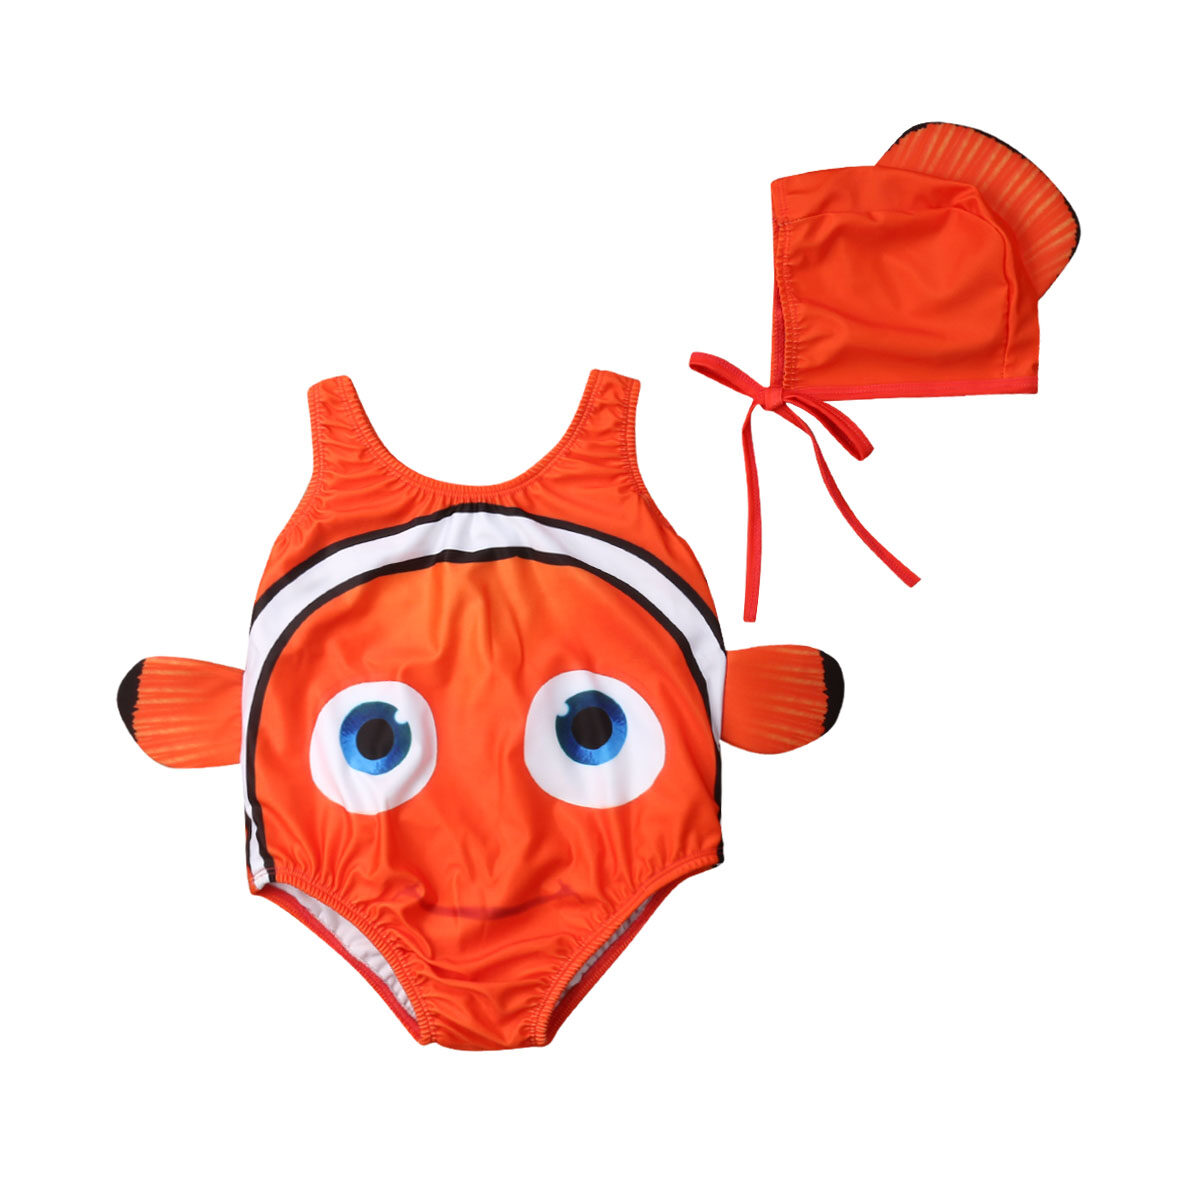 【Pearlbabys】2ชิ้น/เซ็ตทารกเด็กเด็กผู้หญิง Mermaid Tankini บิกินี่ทำความสะอาดชุดว่ายน้ำชุดว่ายน้ำชิ้น